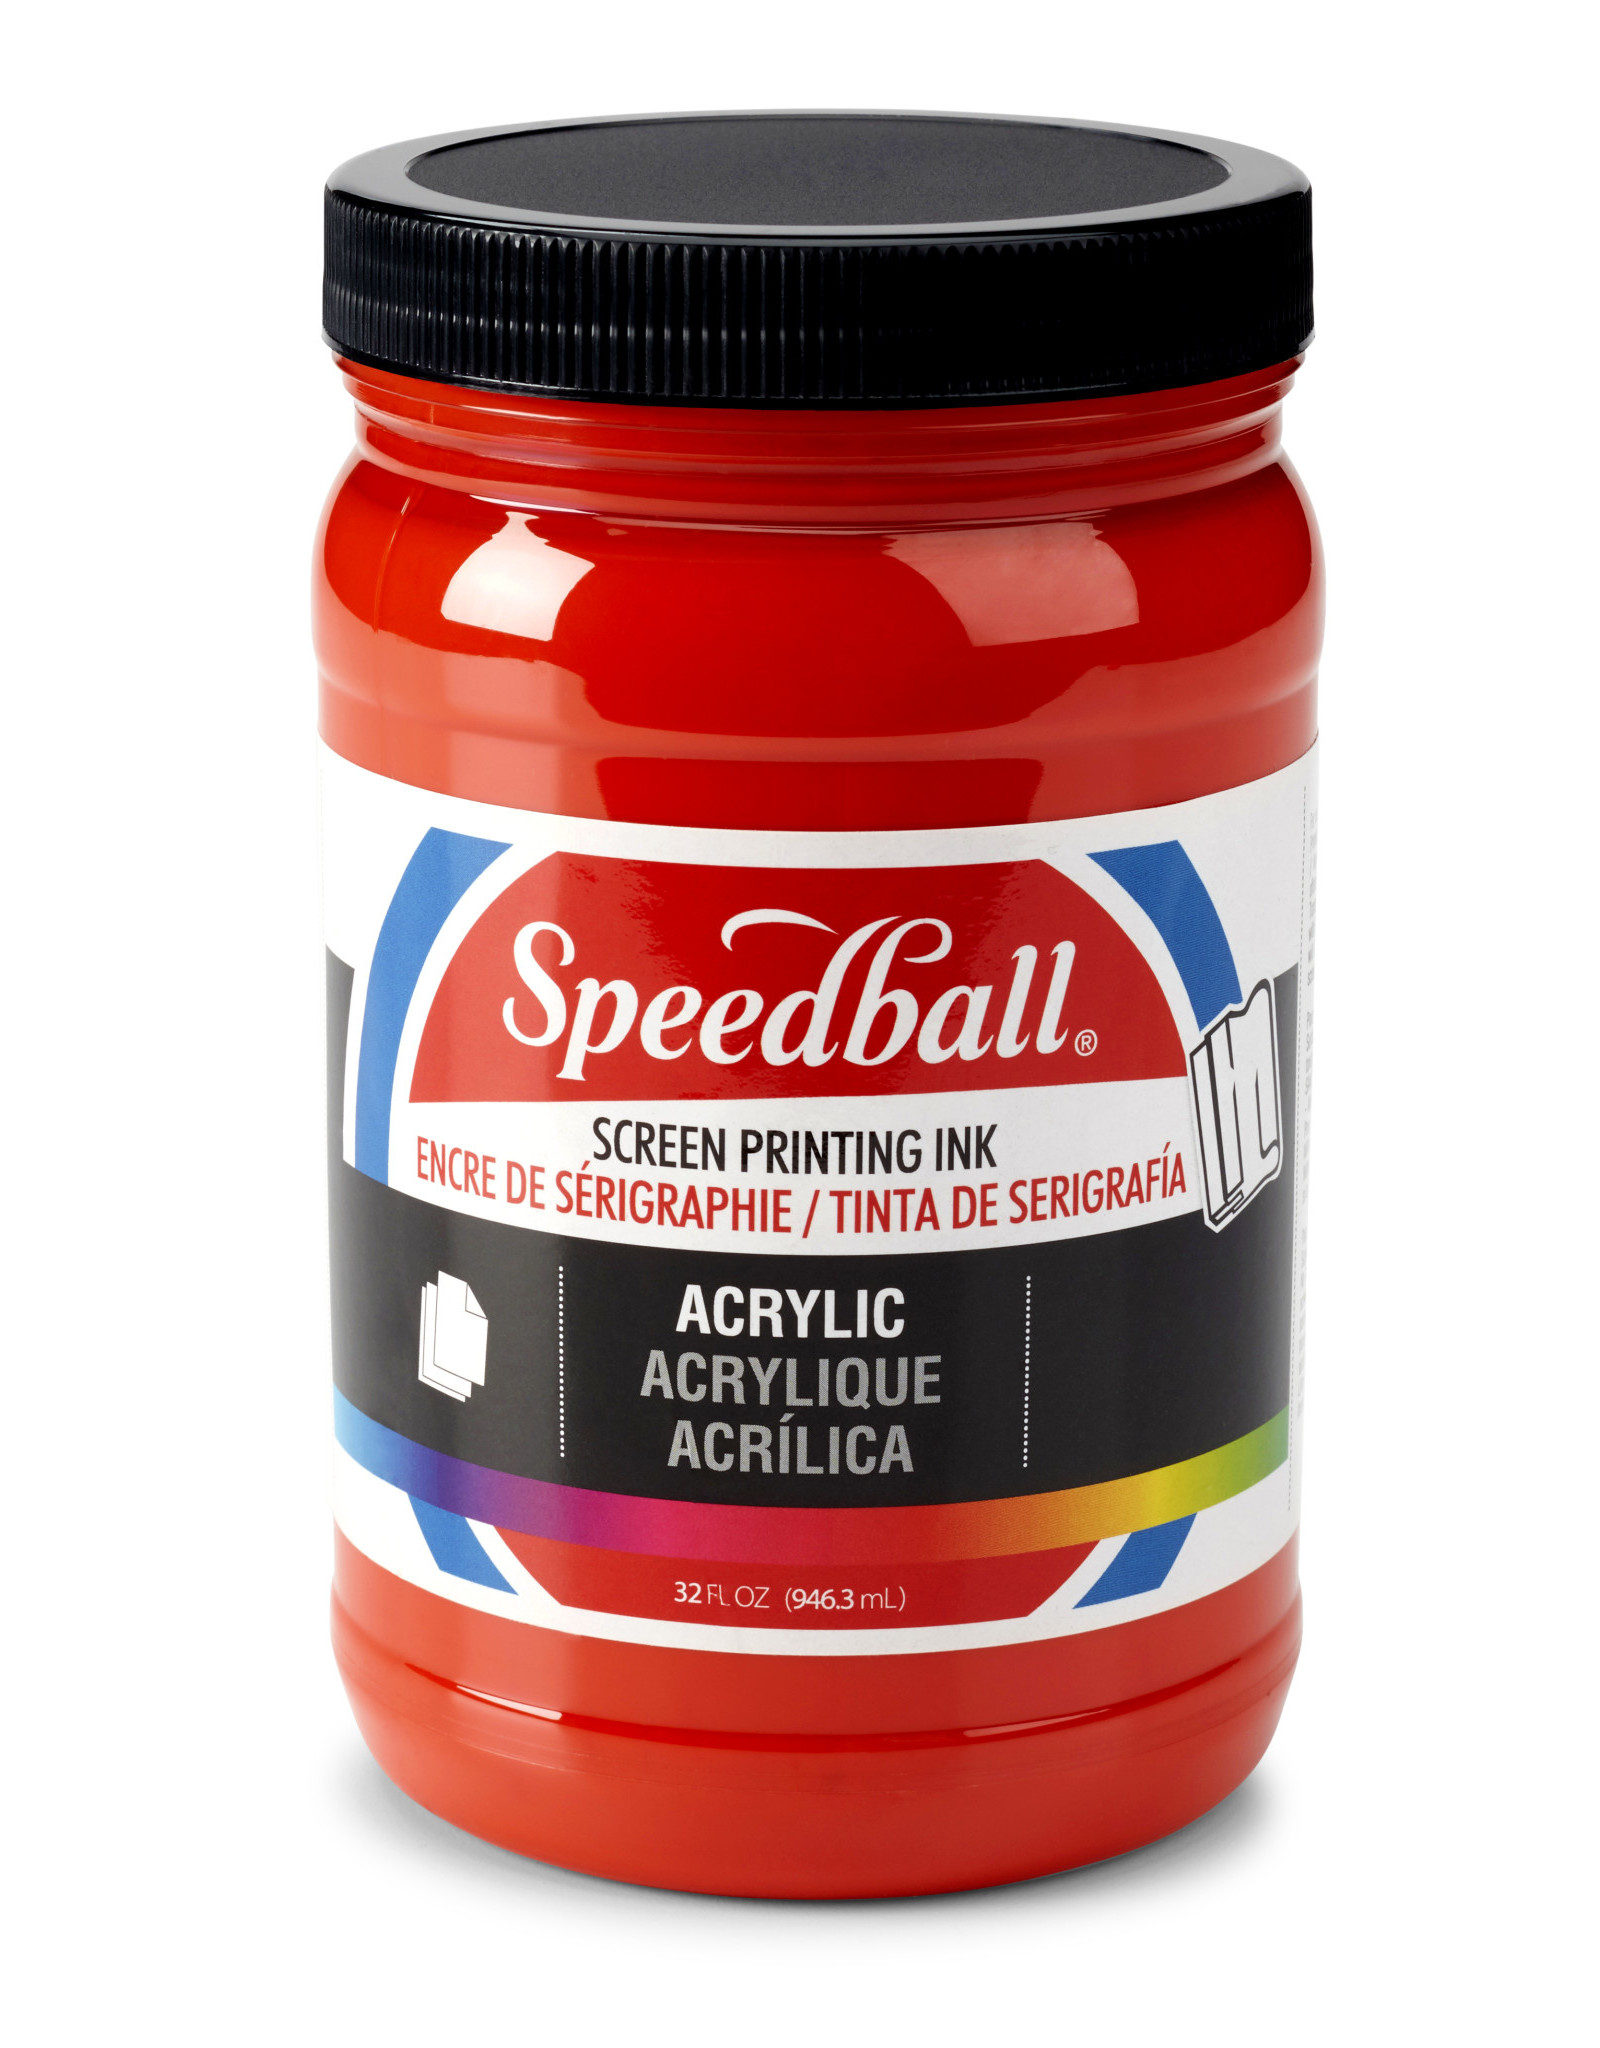 SPEEDBALL ART PRODUCTS Speedball Acrylic Screen Printing Ink, Fire Red, 32oz